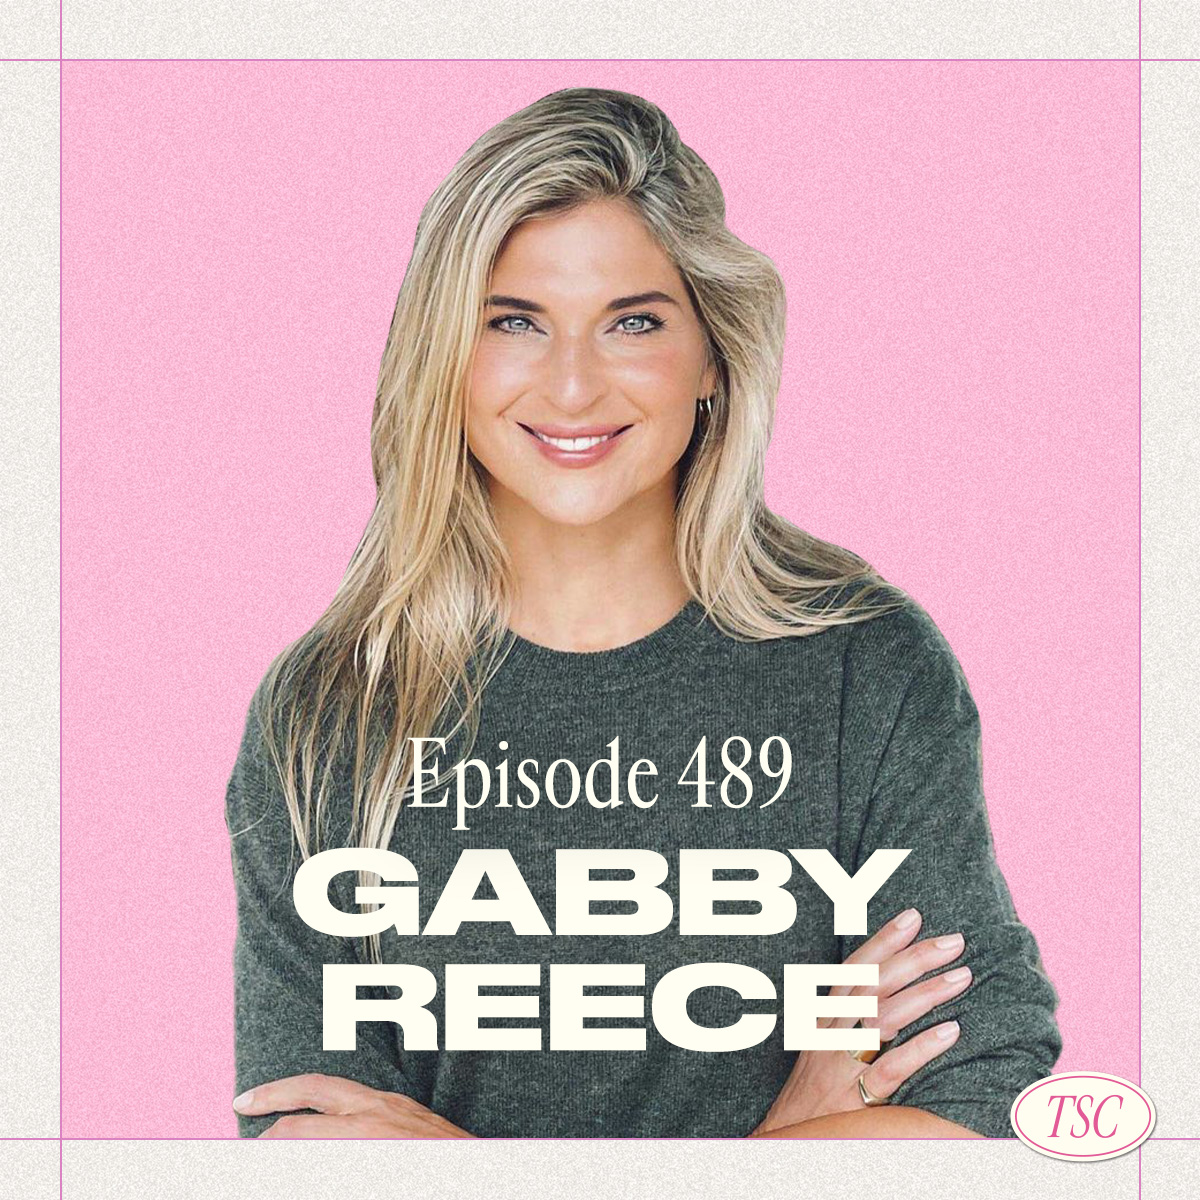 «The Gabby Reece Show» в Apple Podcasts